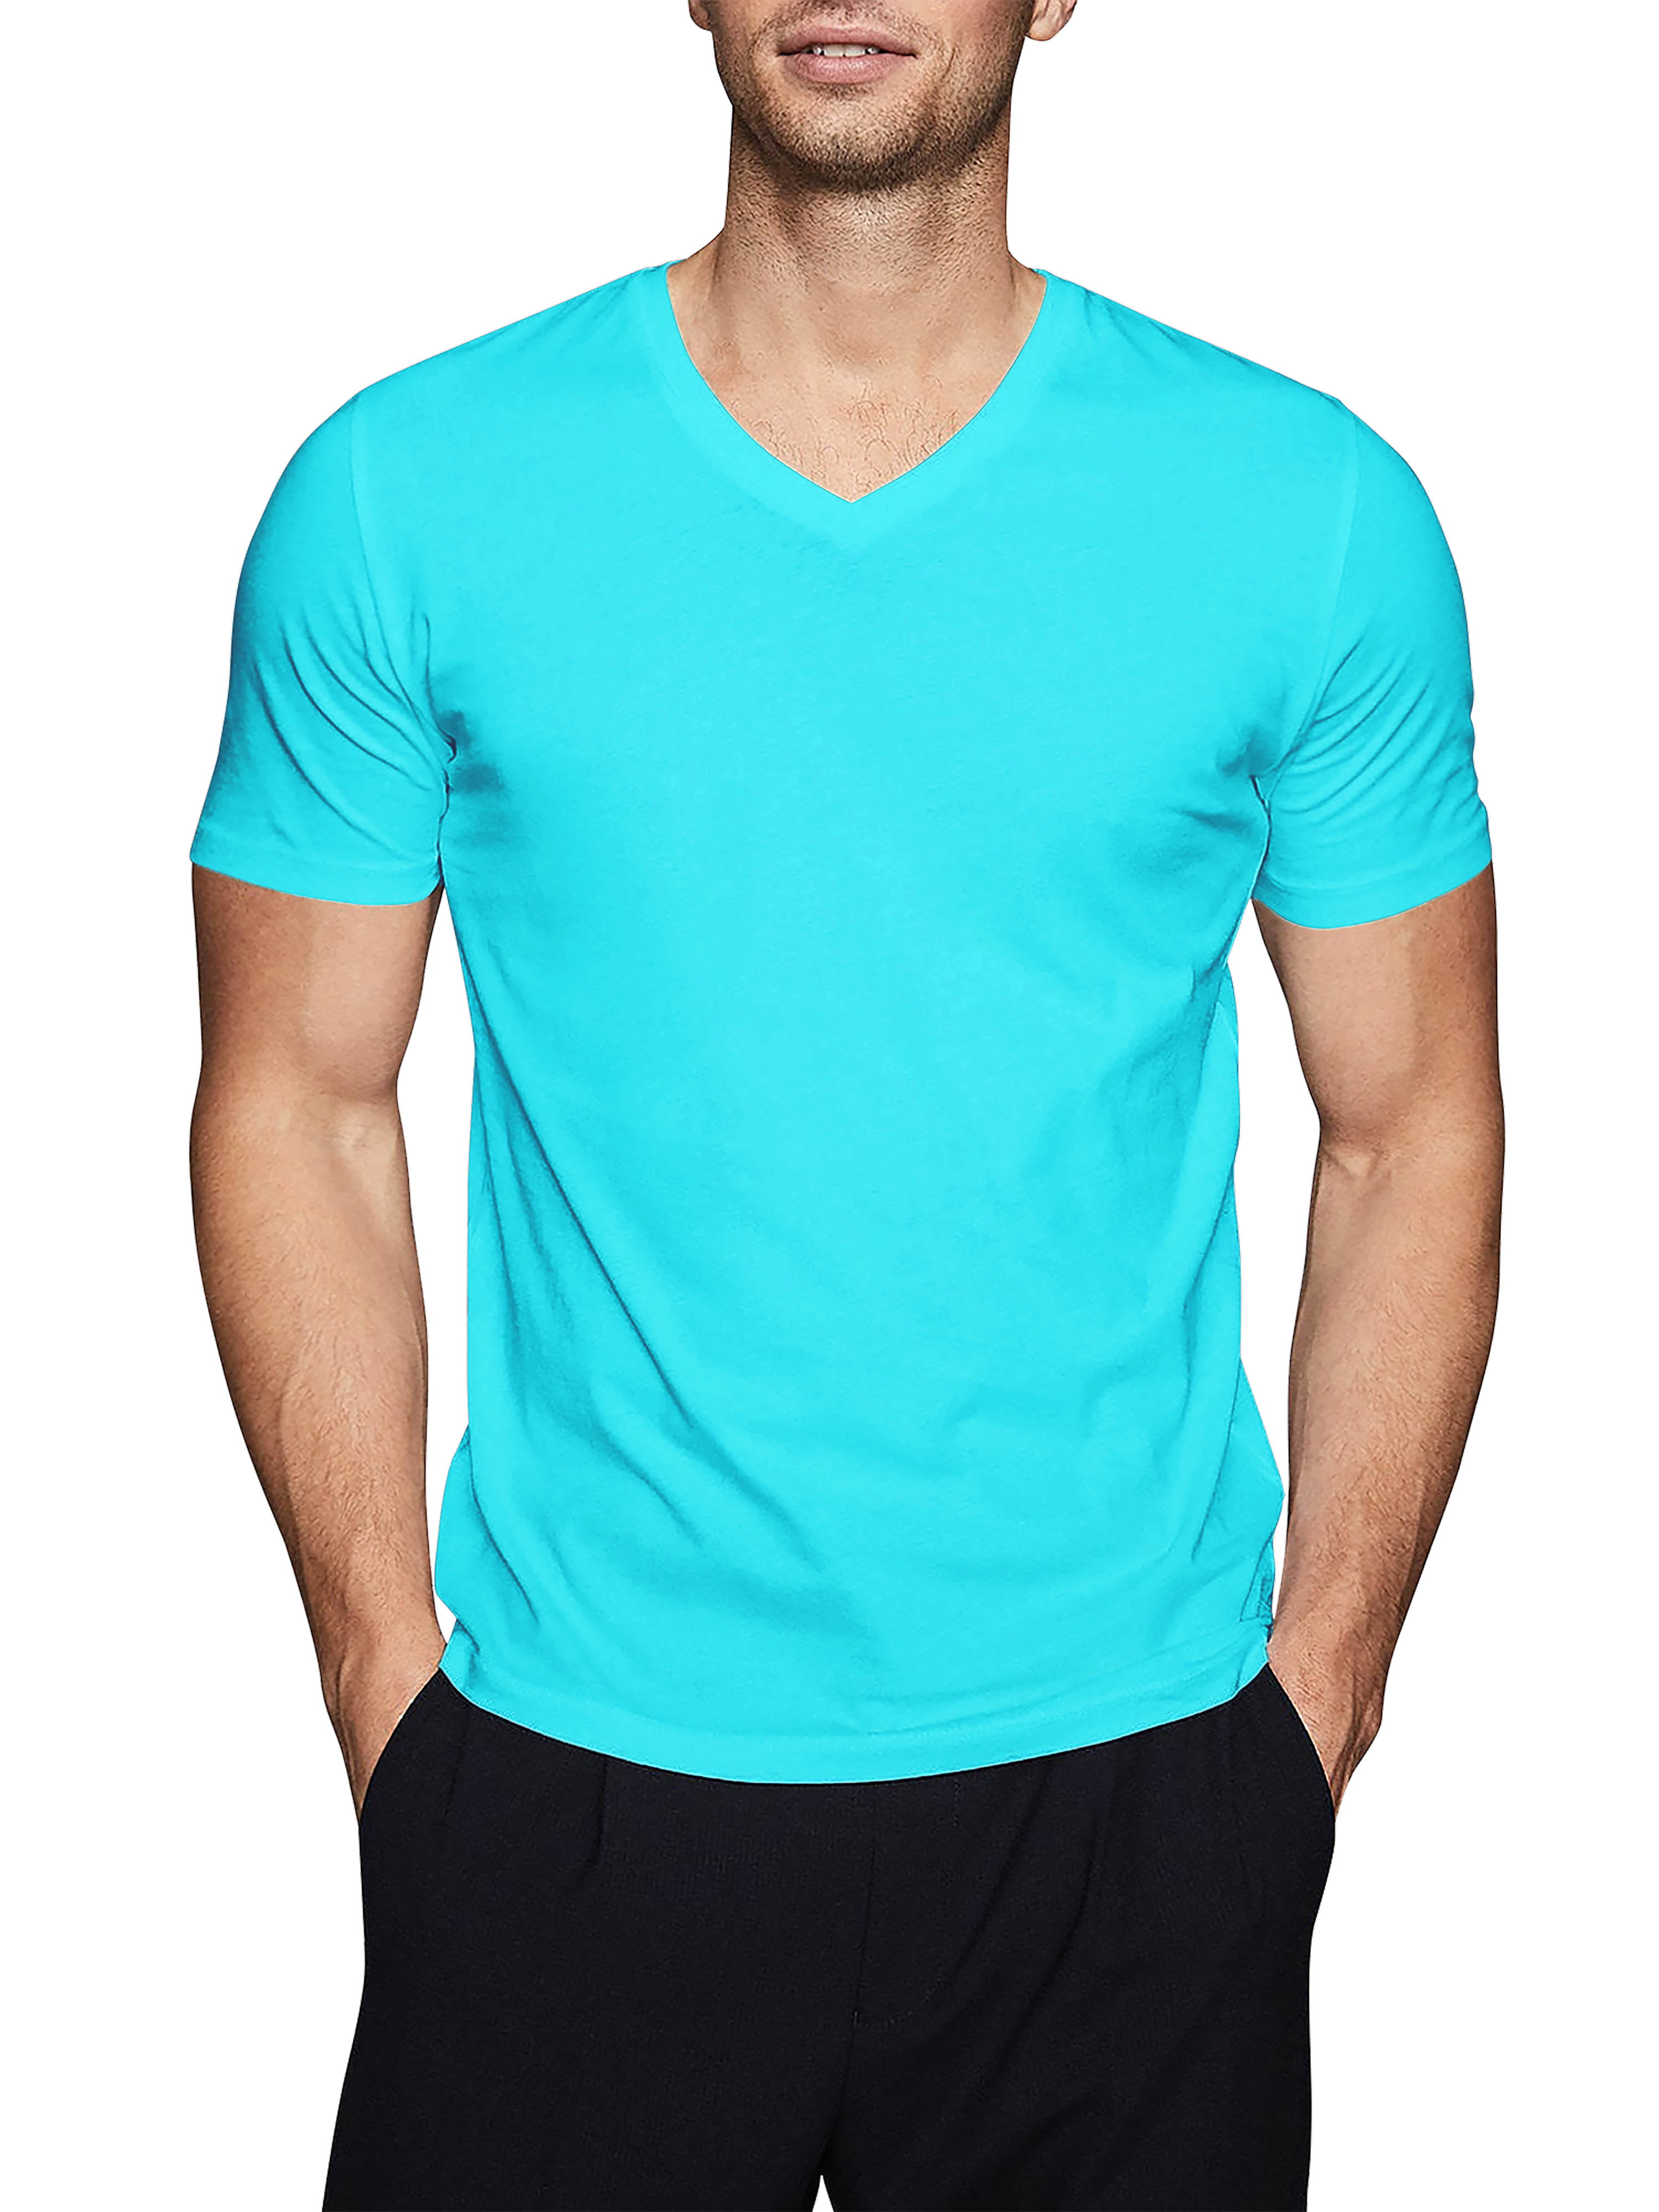 Mens Plain Summer T-Shirt Crew Neck Short Sleeve Casual Basic Melange Tops S-2XL